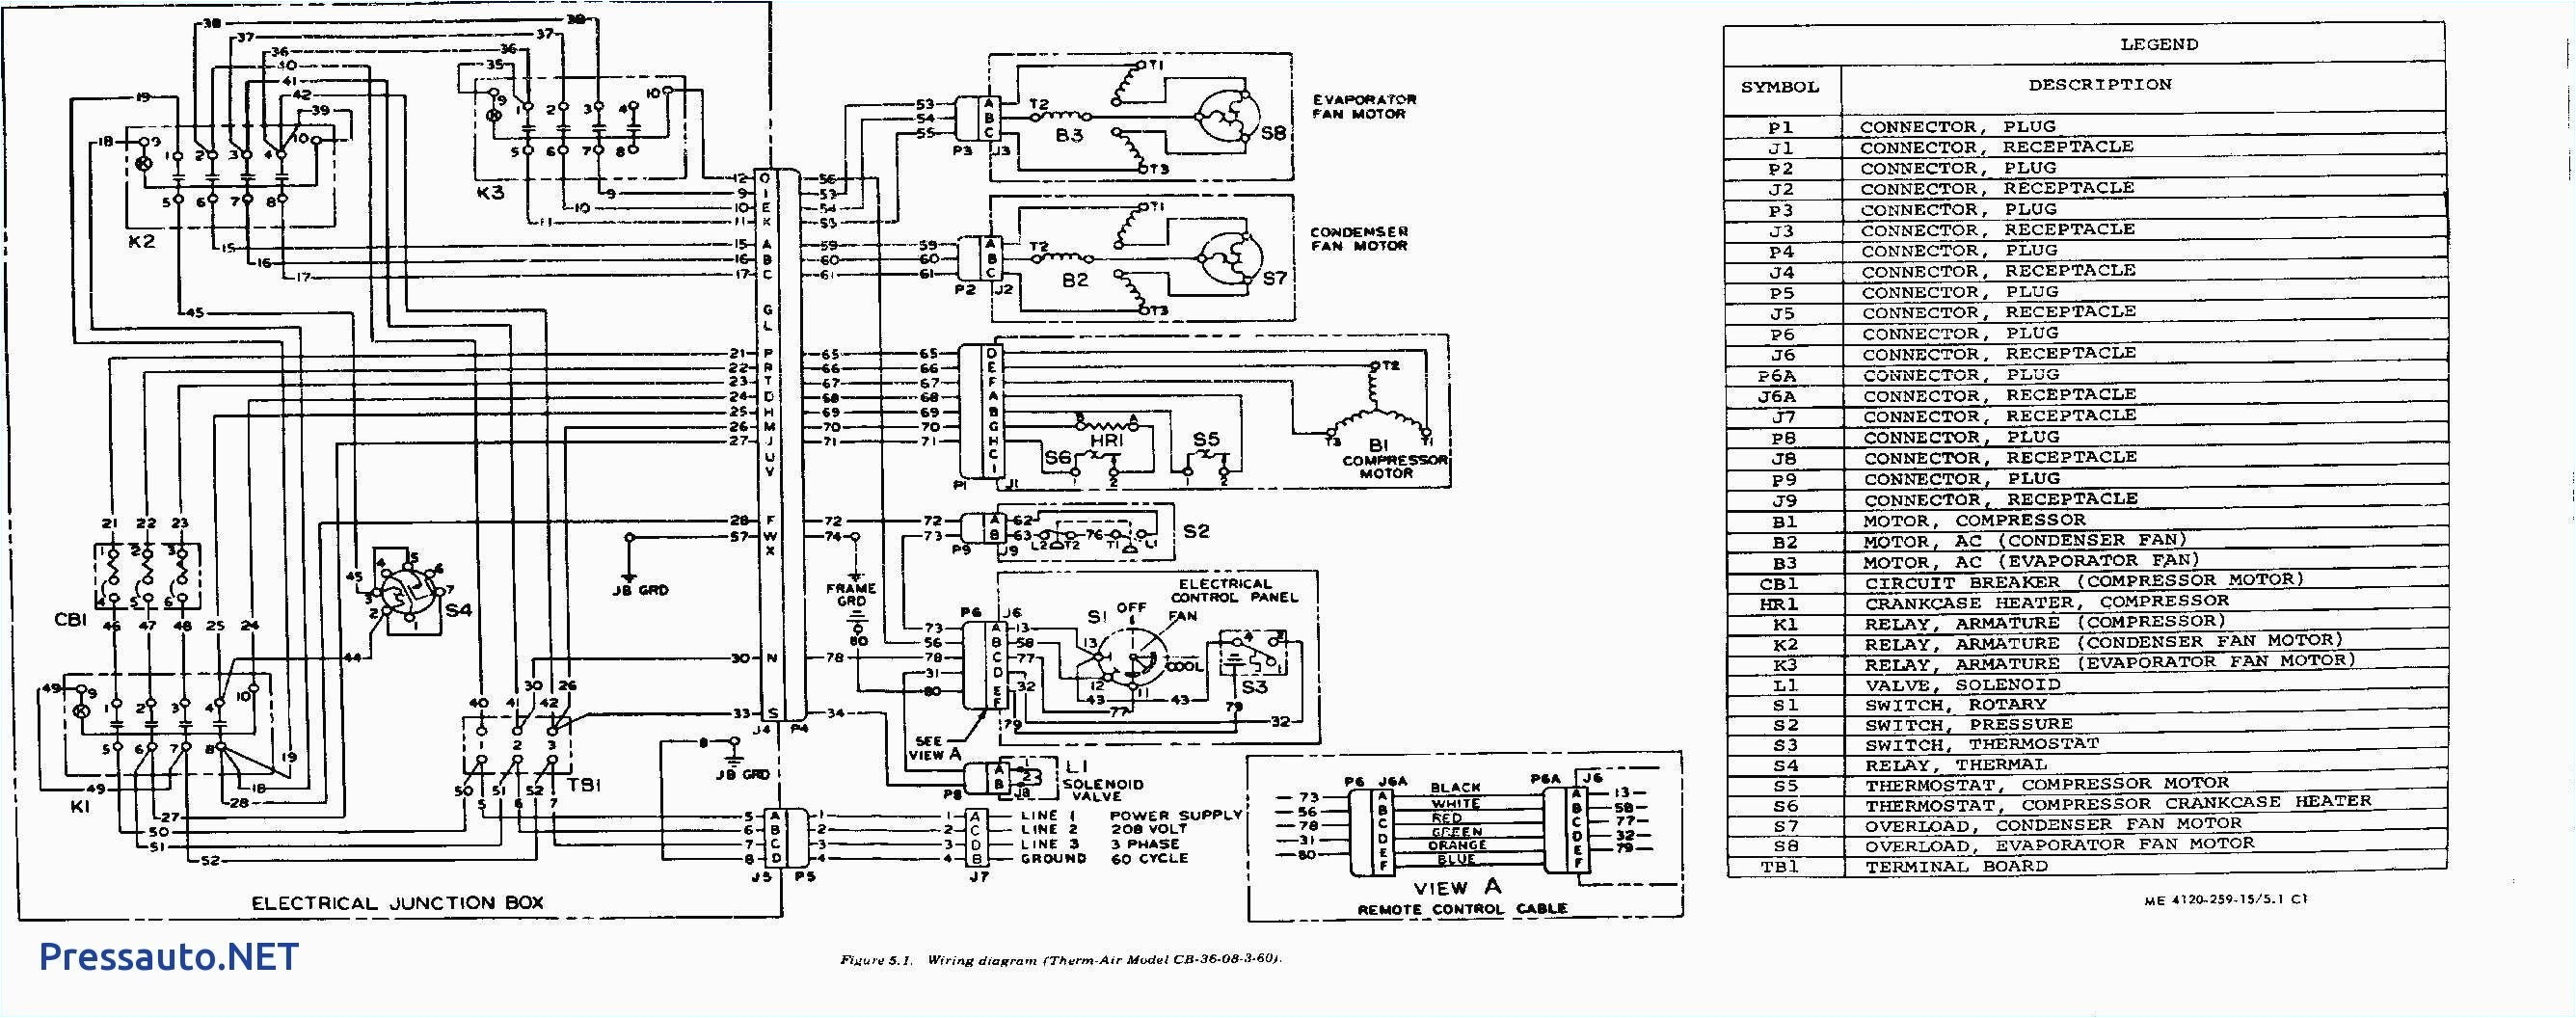 trane air conditioning wiring diagram wiring diagram sort trane split system wiring diagram trane xe 900